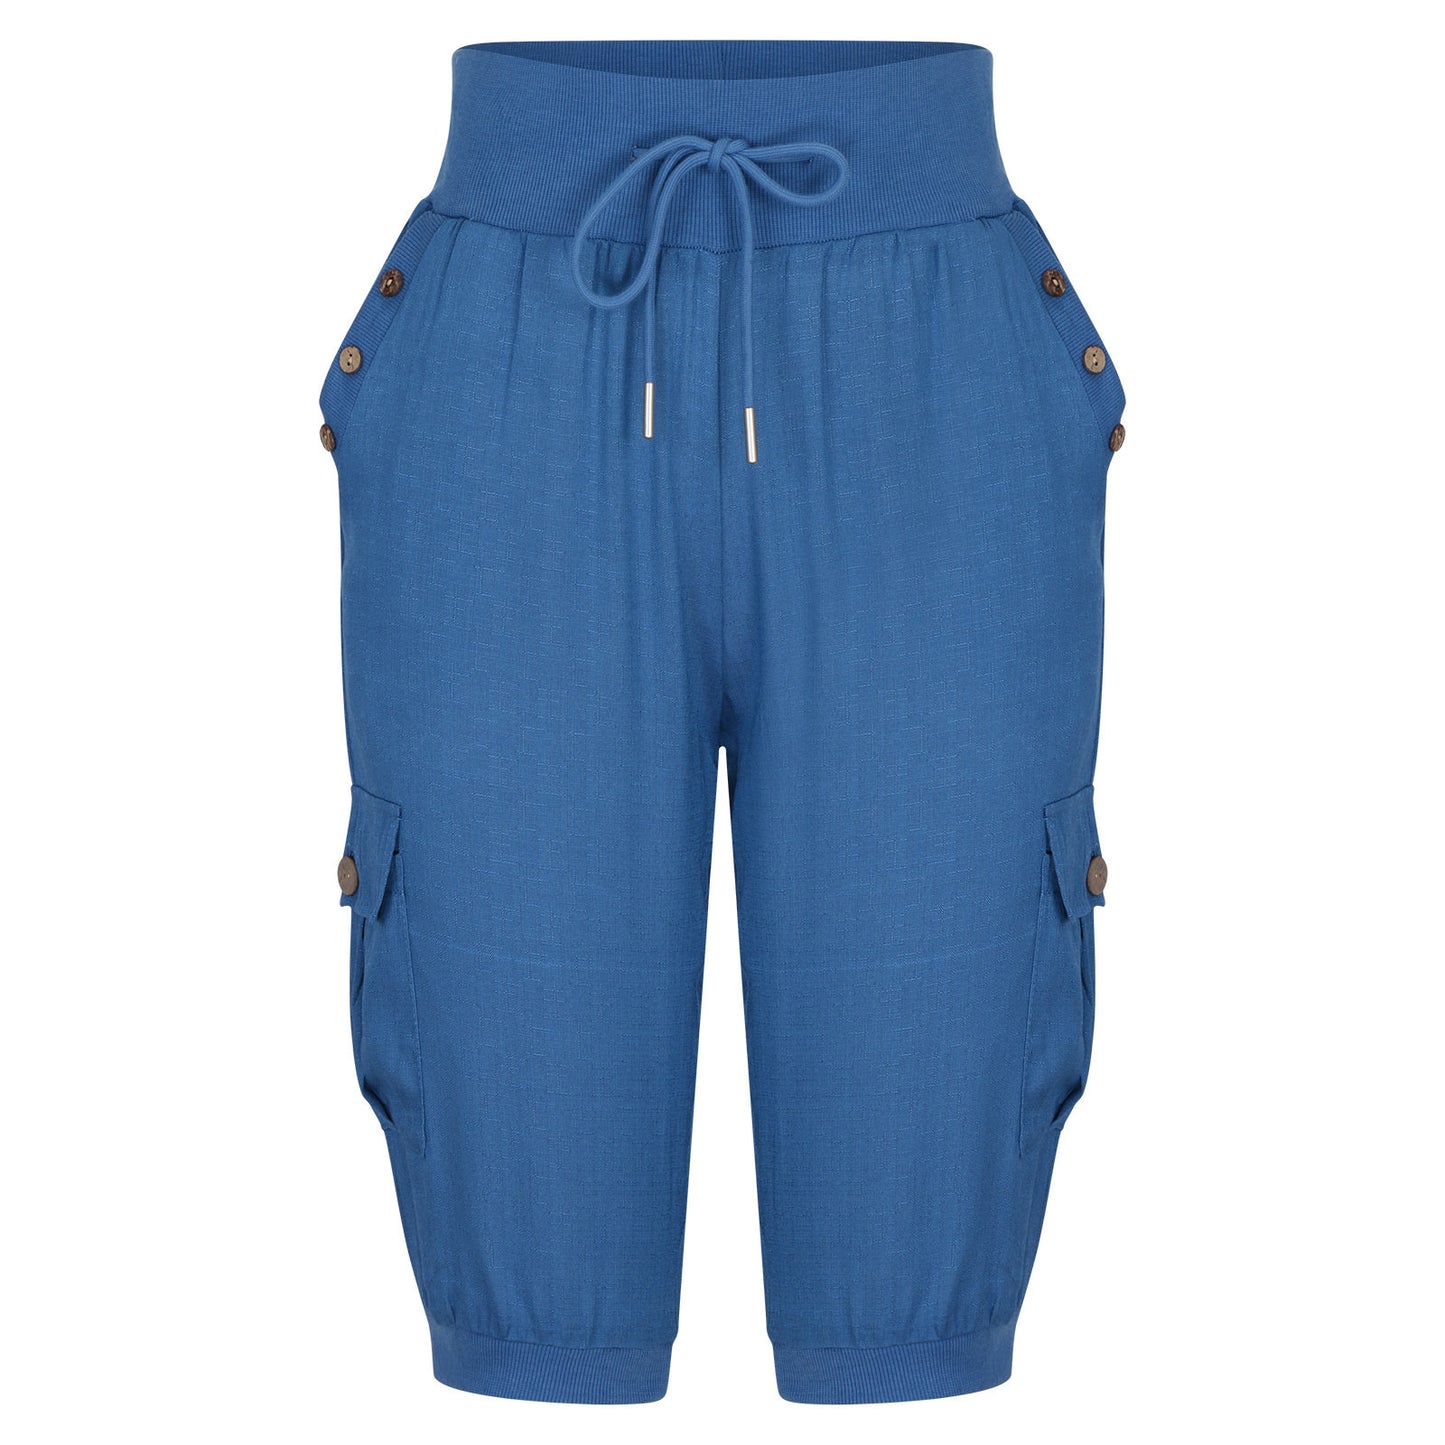 Women's Cropped Pants Cotton Linen Cargo Pocket Casual Pants apparels & accessories